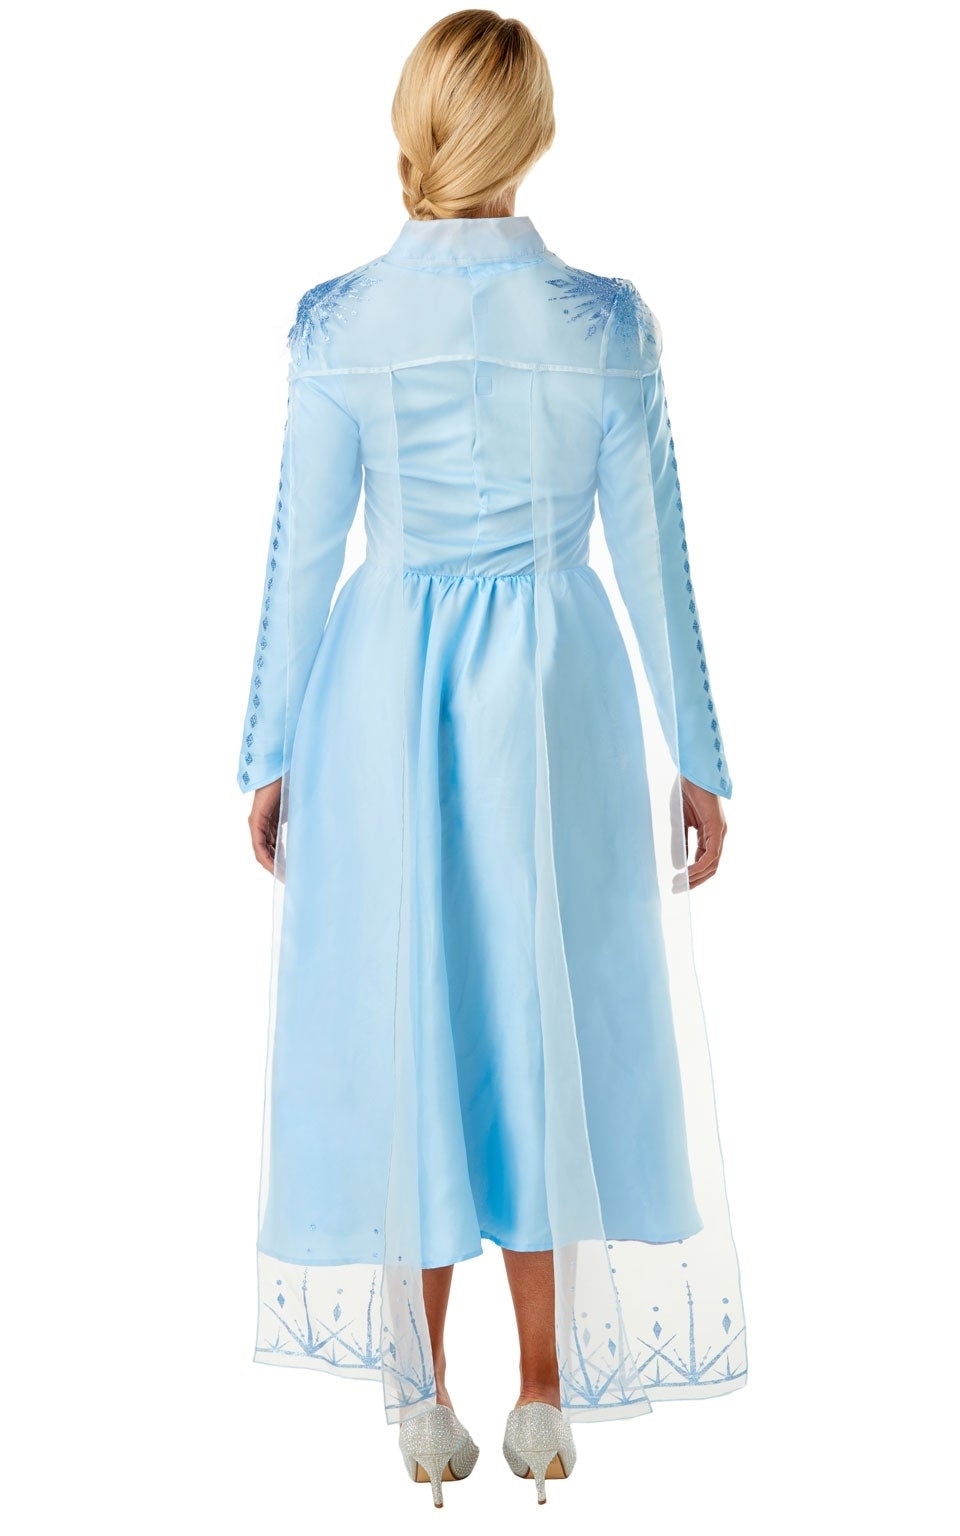 Frozen 2 Adult Elsa Travel Outfit Costume_2